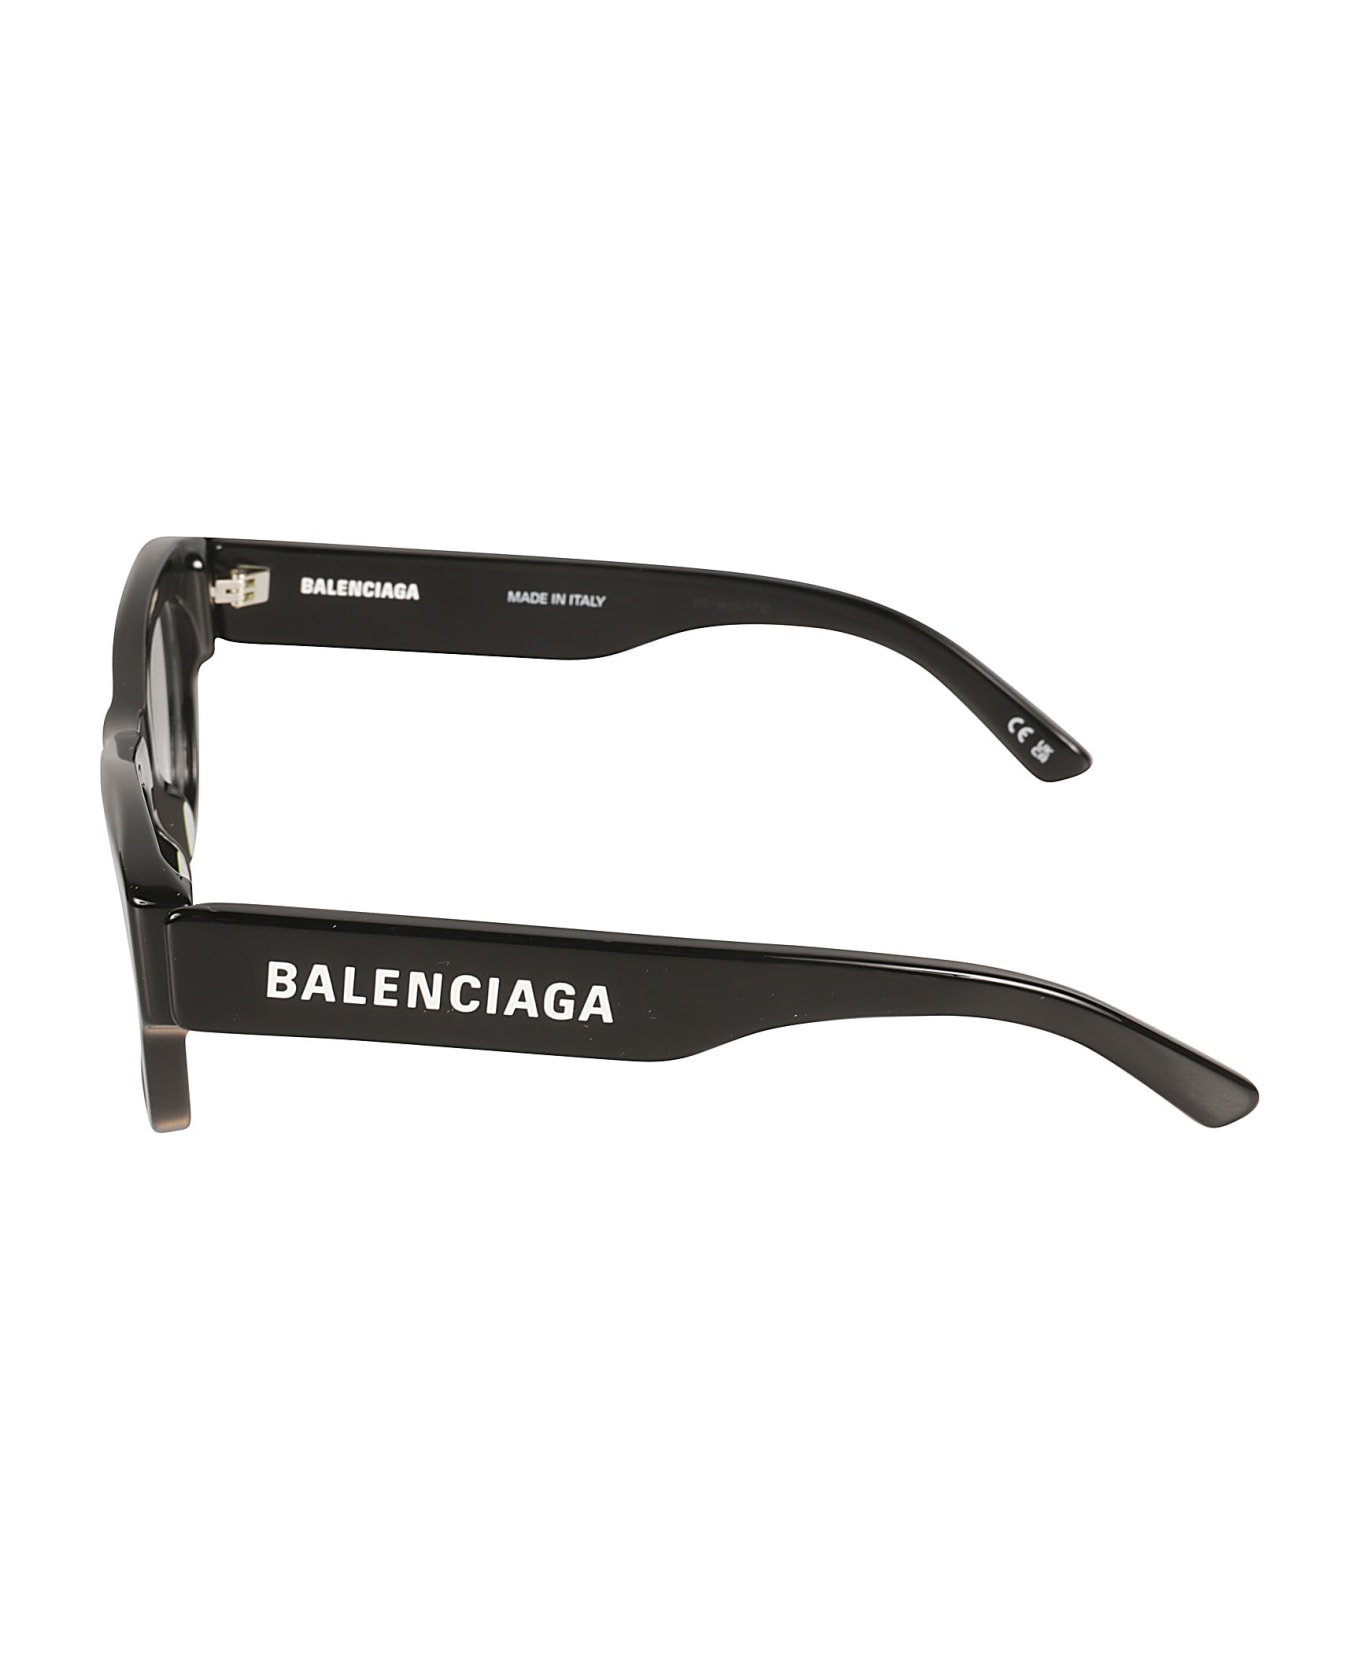 Balenciaga Eyewear Logo Sided Square Frame Glasses - Black/Transparent